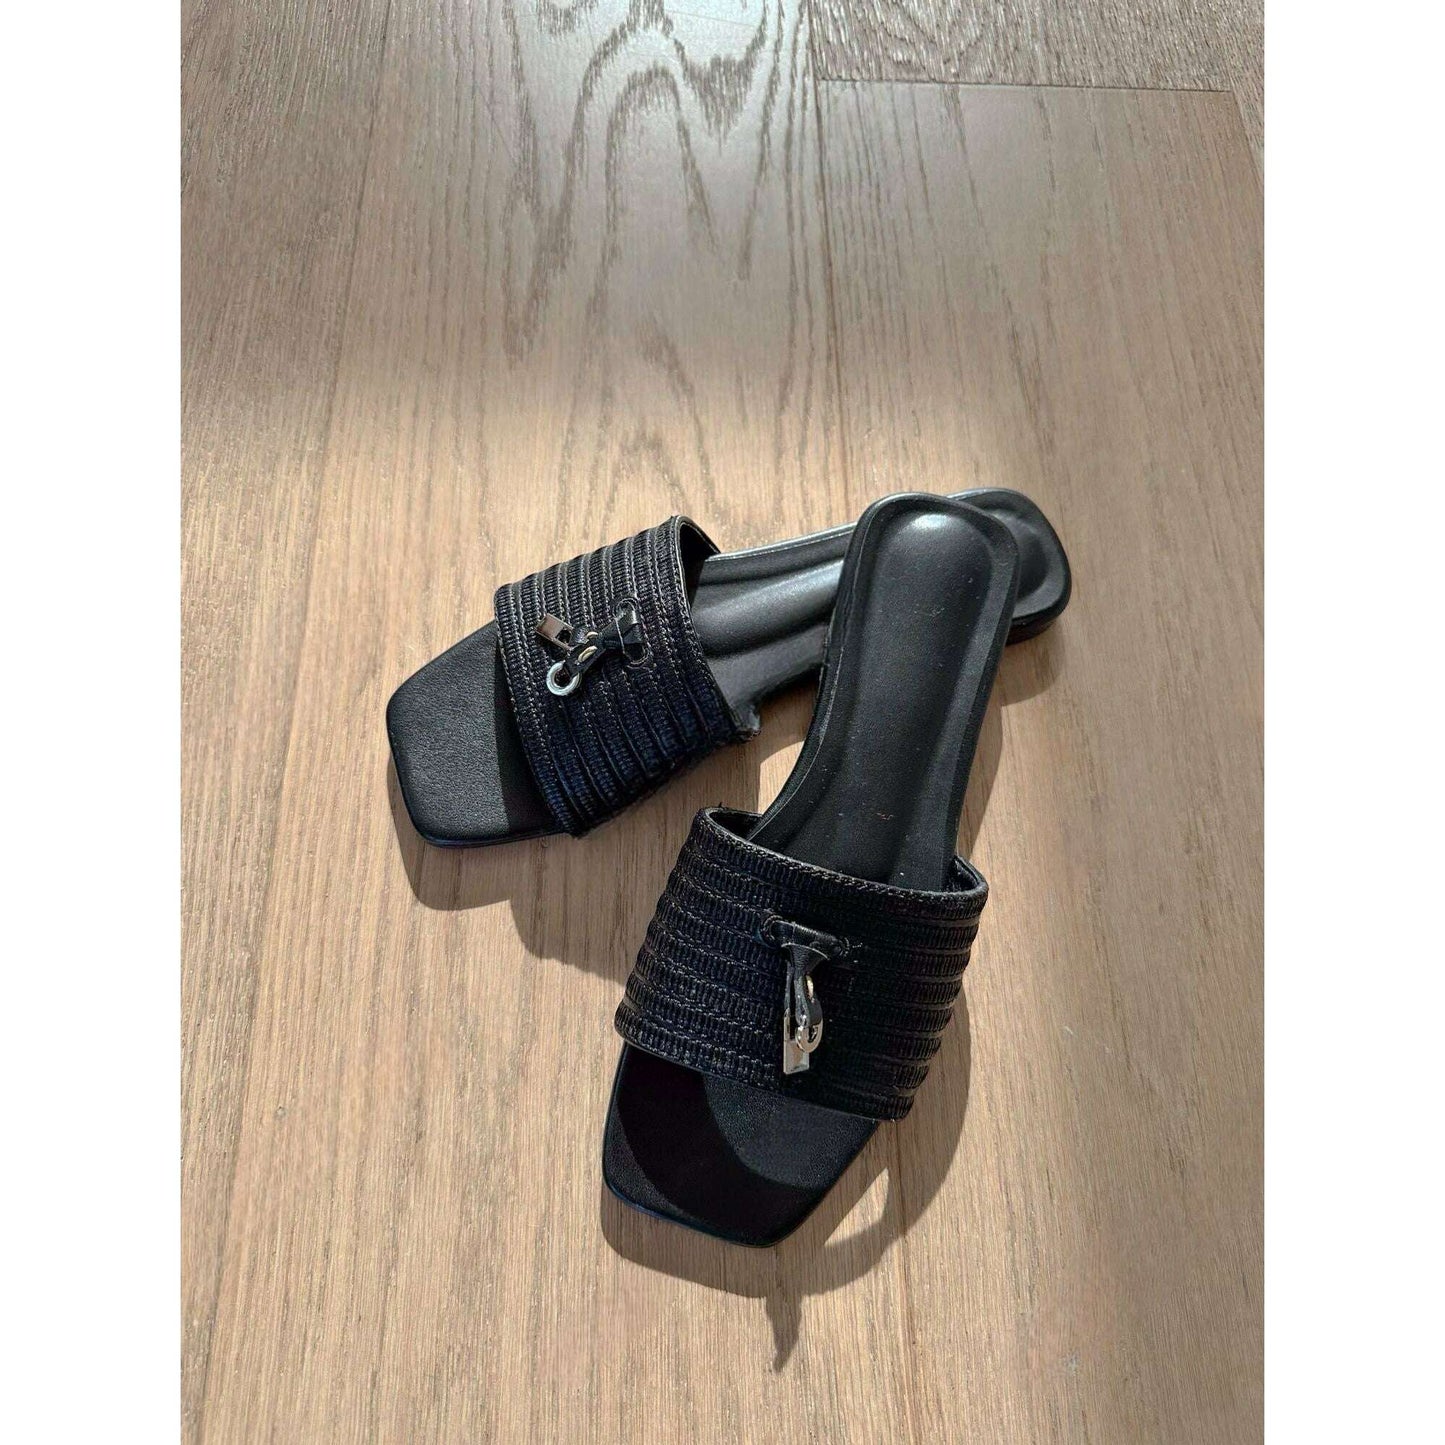 MUMMY.cc:韓國製真皮吊飾拖鞋涼鞋(高品質)